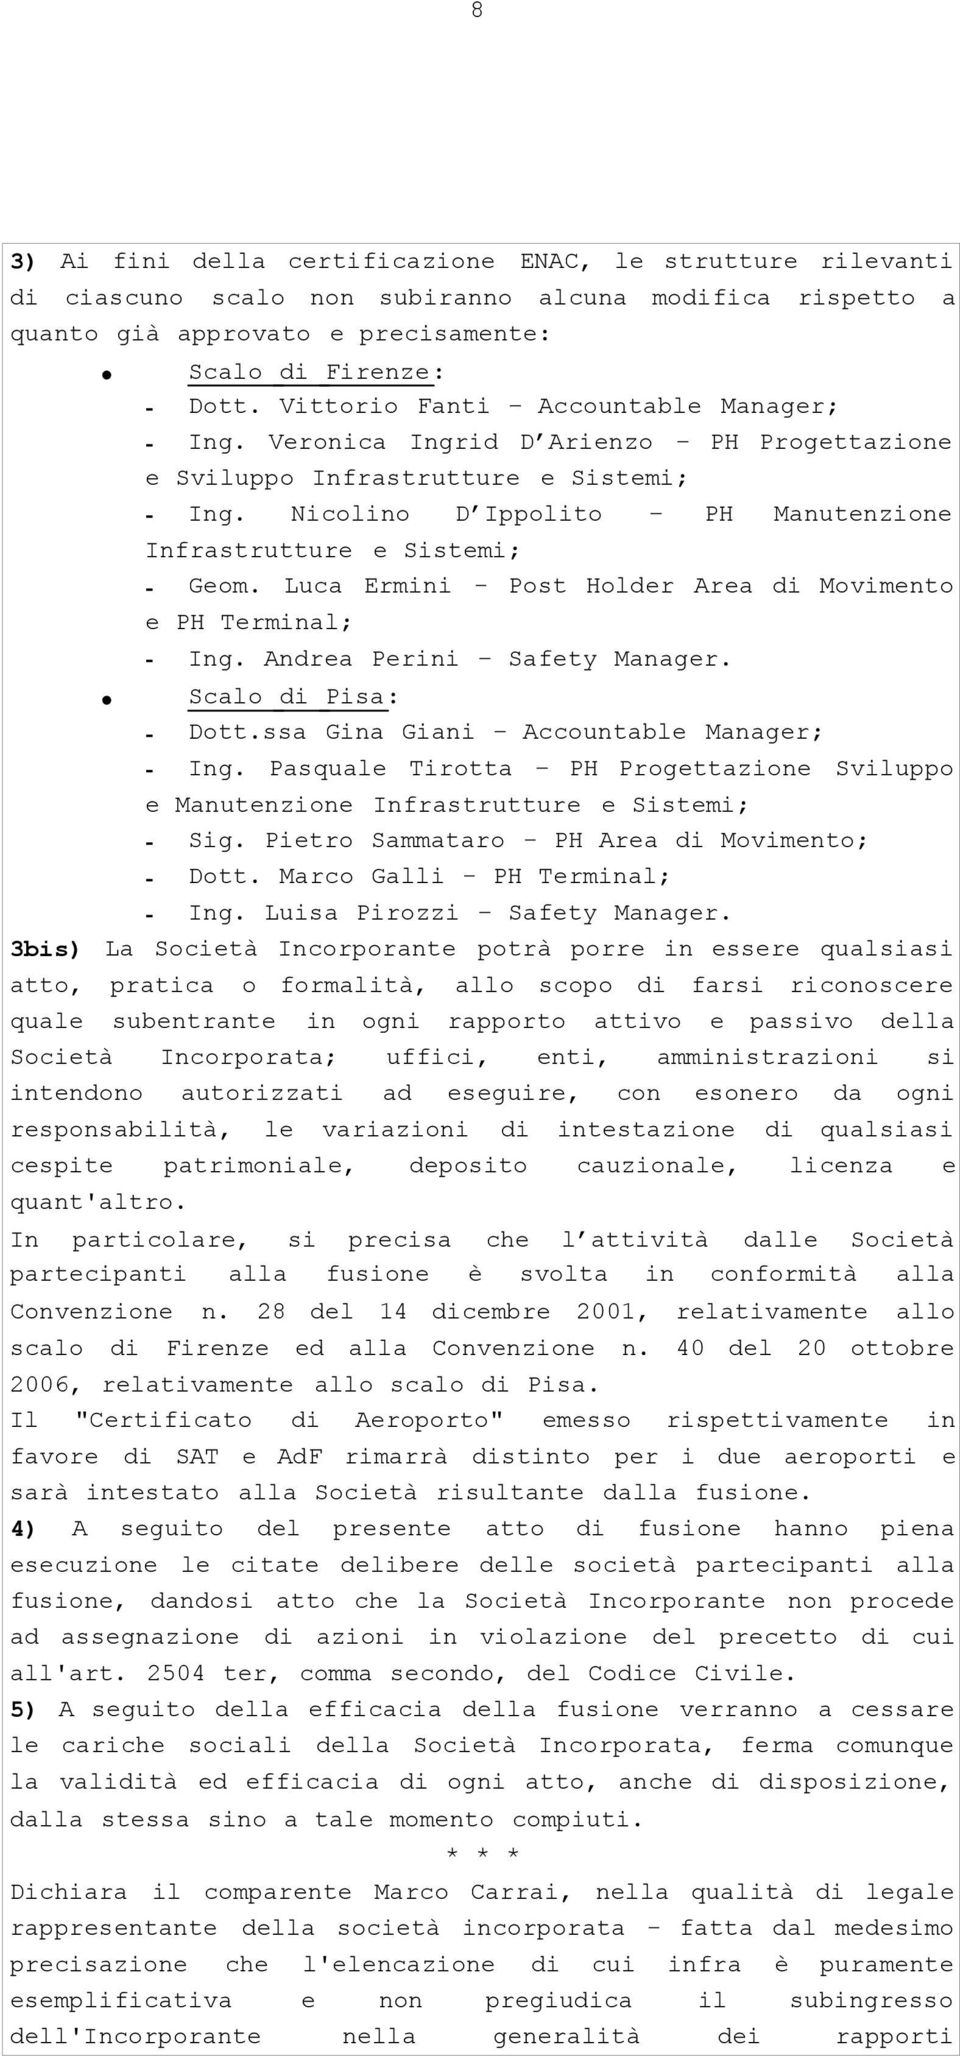 Luca Ermini - Post Holder Area di Movimento _e PH Terminal; - Ing. Andrea Perini Safety Manager. Scalo di Pisa: - Dott.ssa Gina Giani Accountable Manager; - Ing.